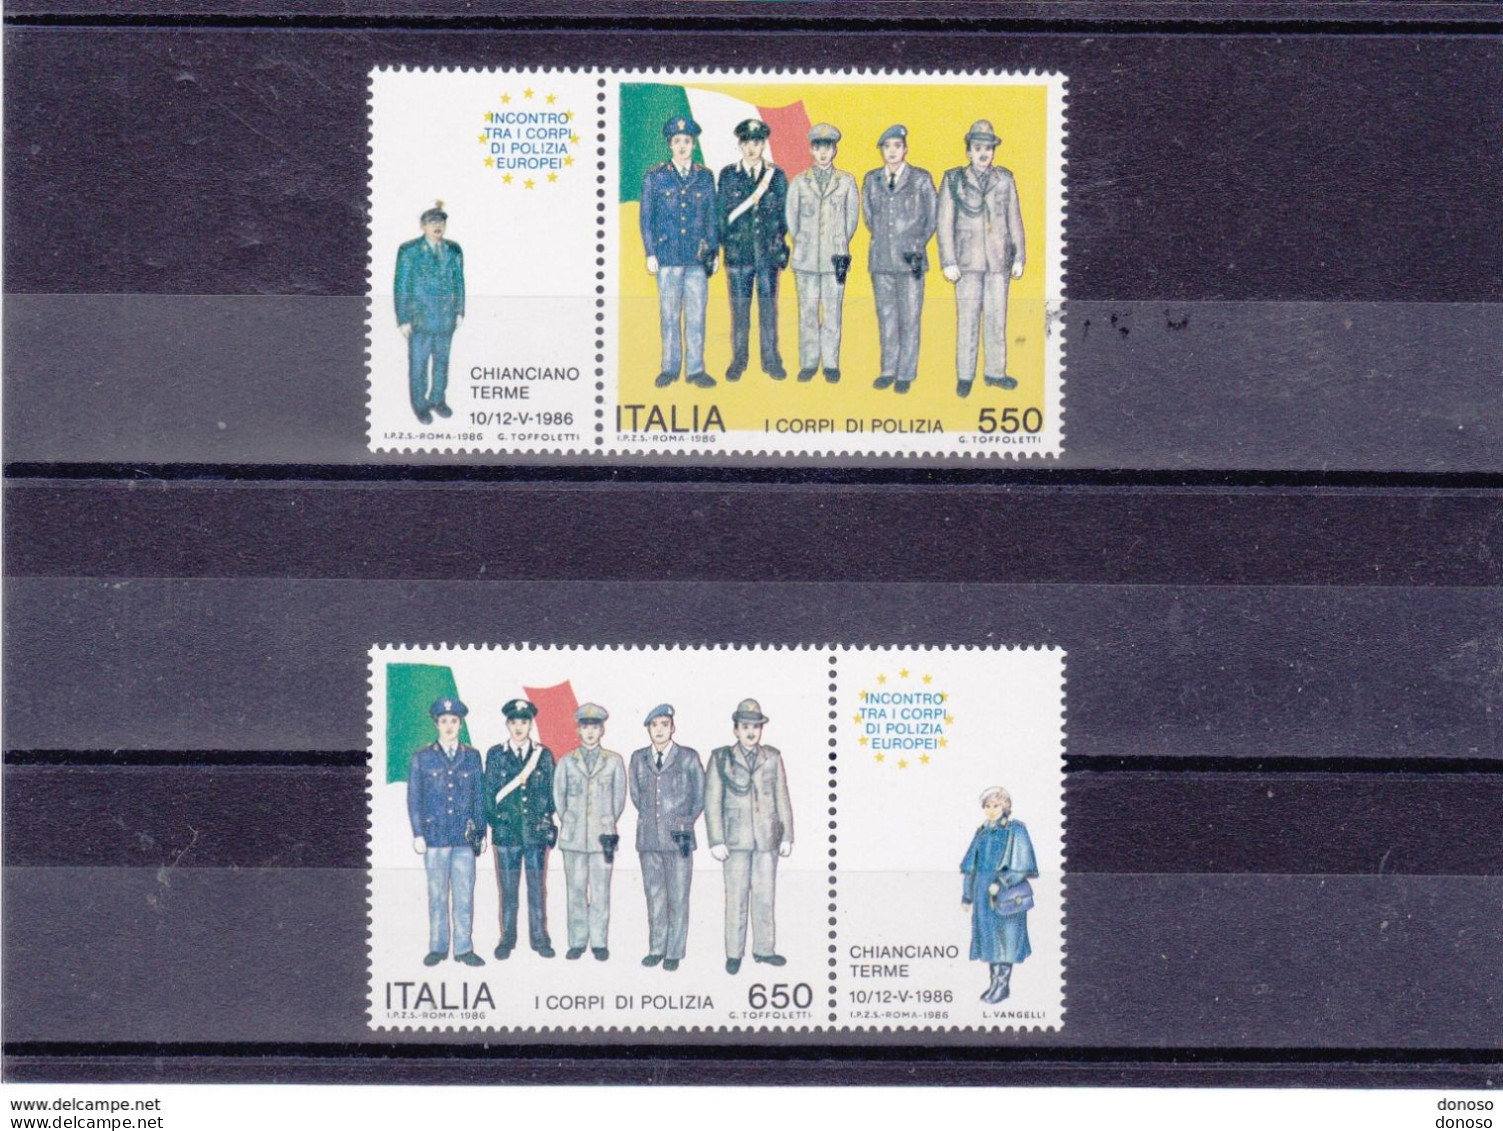 ITALIE 1986 POLICE Yvert 1705-1706, Michel 1973-1974 NEUF** MNH Cote 4,50 Euros - 1981-90: Mint/hinged